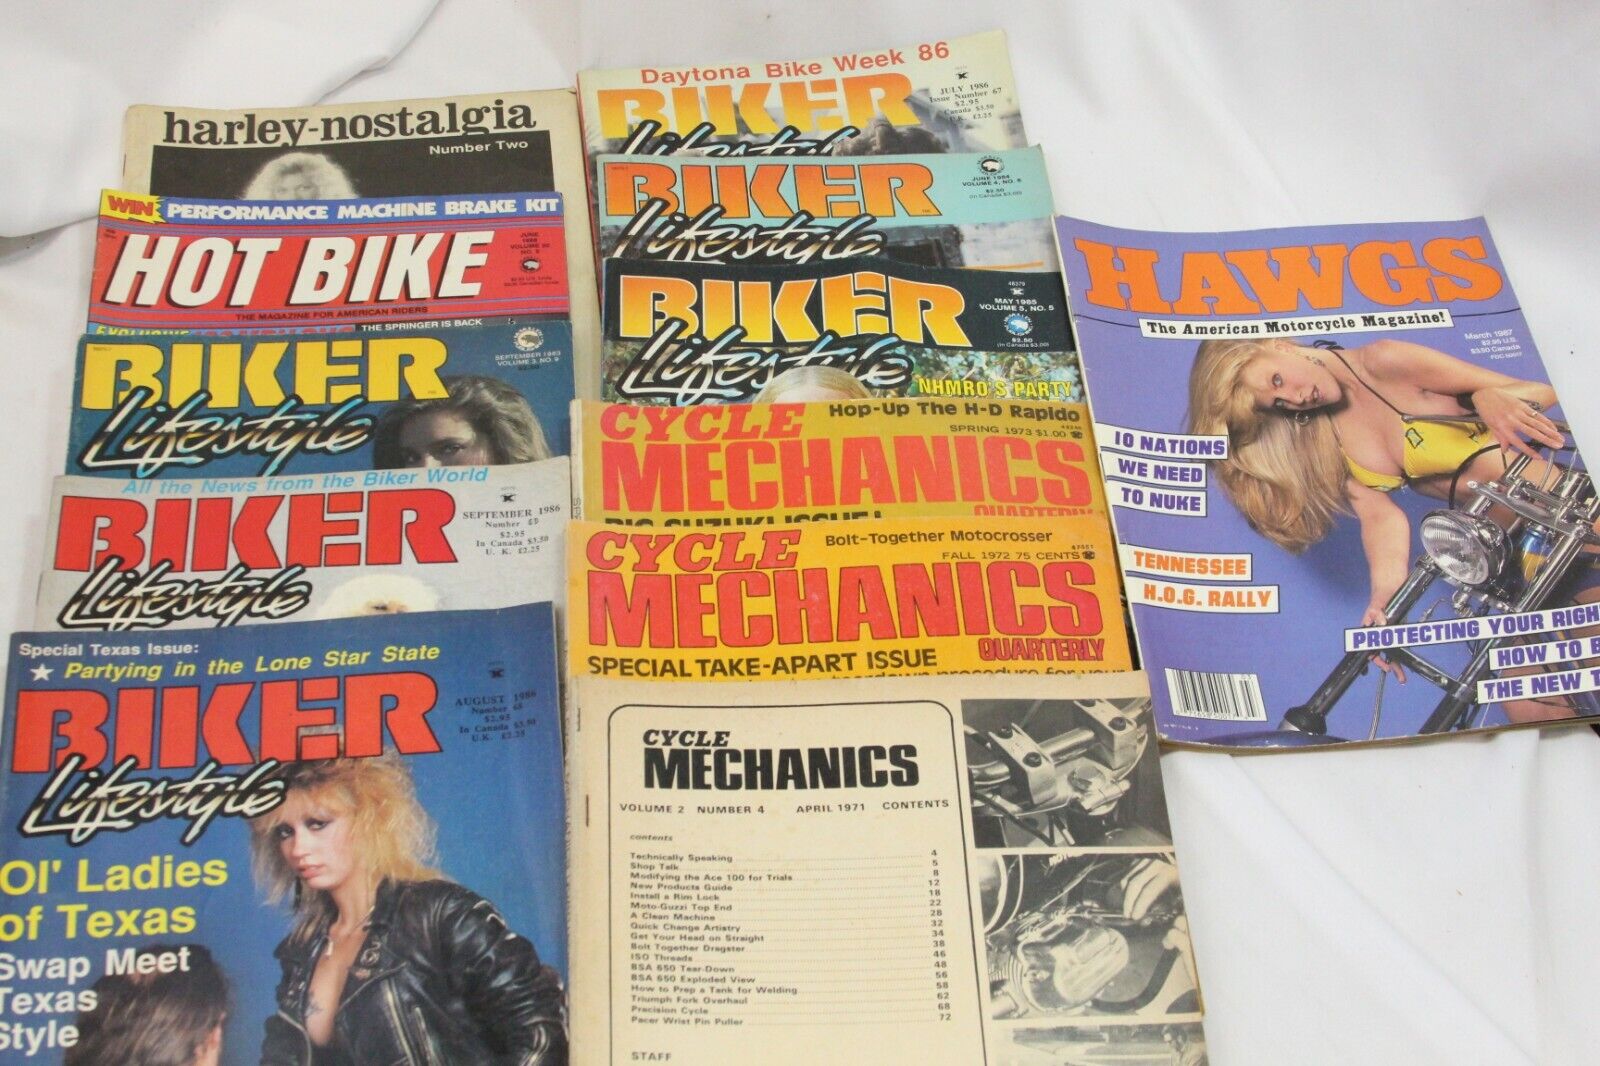 Harley Nostalgia Hot BIke Biker Lifestyle Cycle Mechanics Hawgs 1971 - 1988